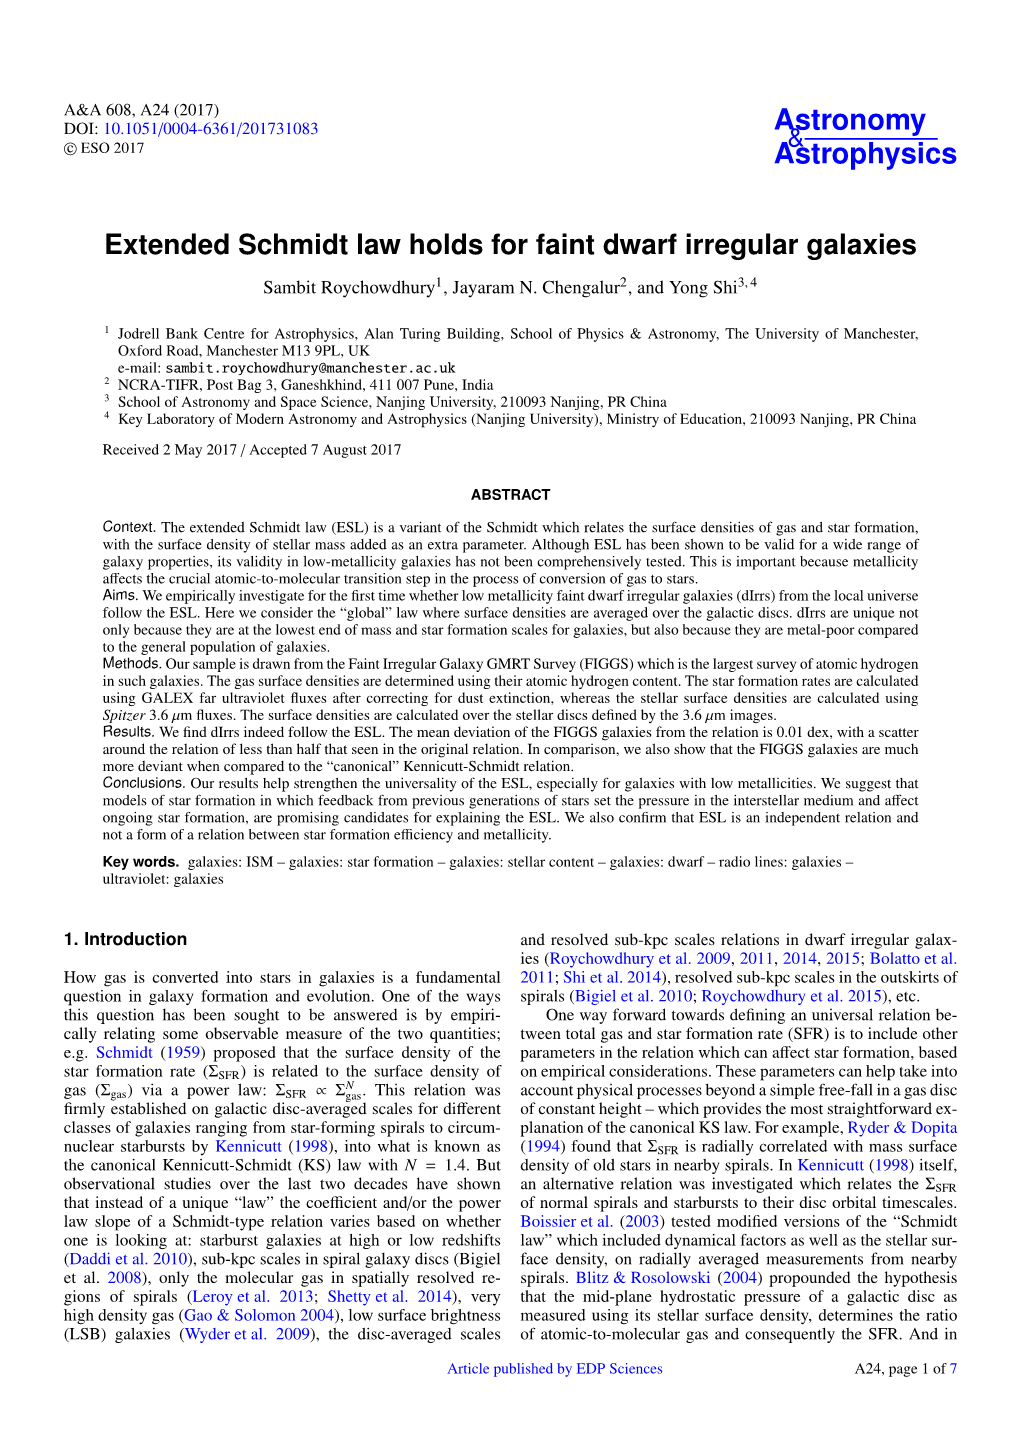 Extended Schmidt Law Holds for Faint Dwarf Irregular Galaxies Sambit Roychowdhury1, Jayaram N